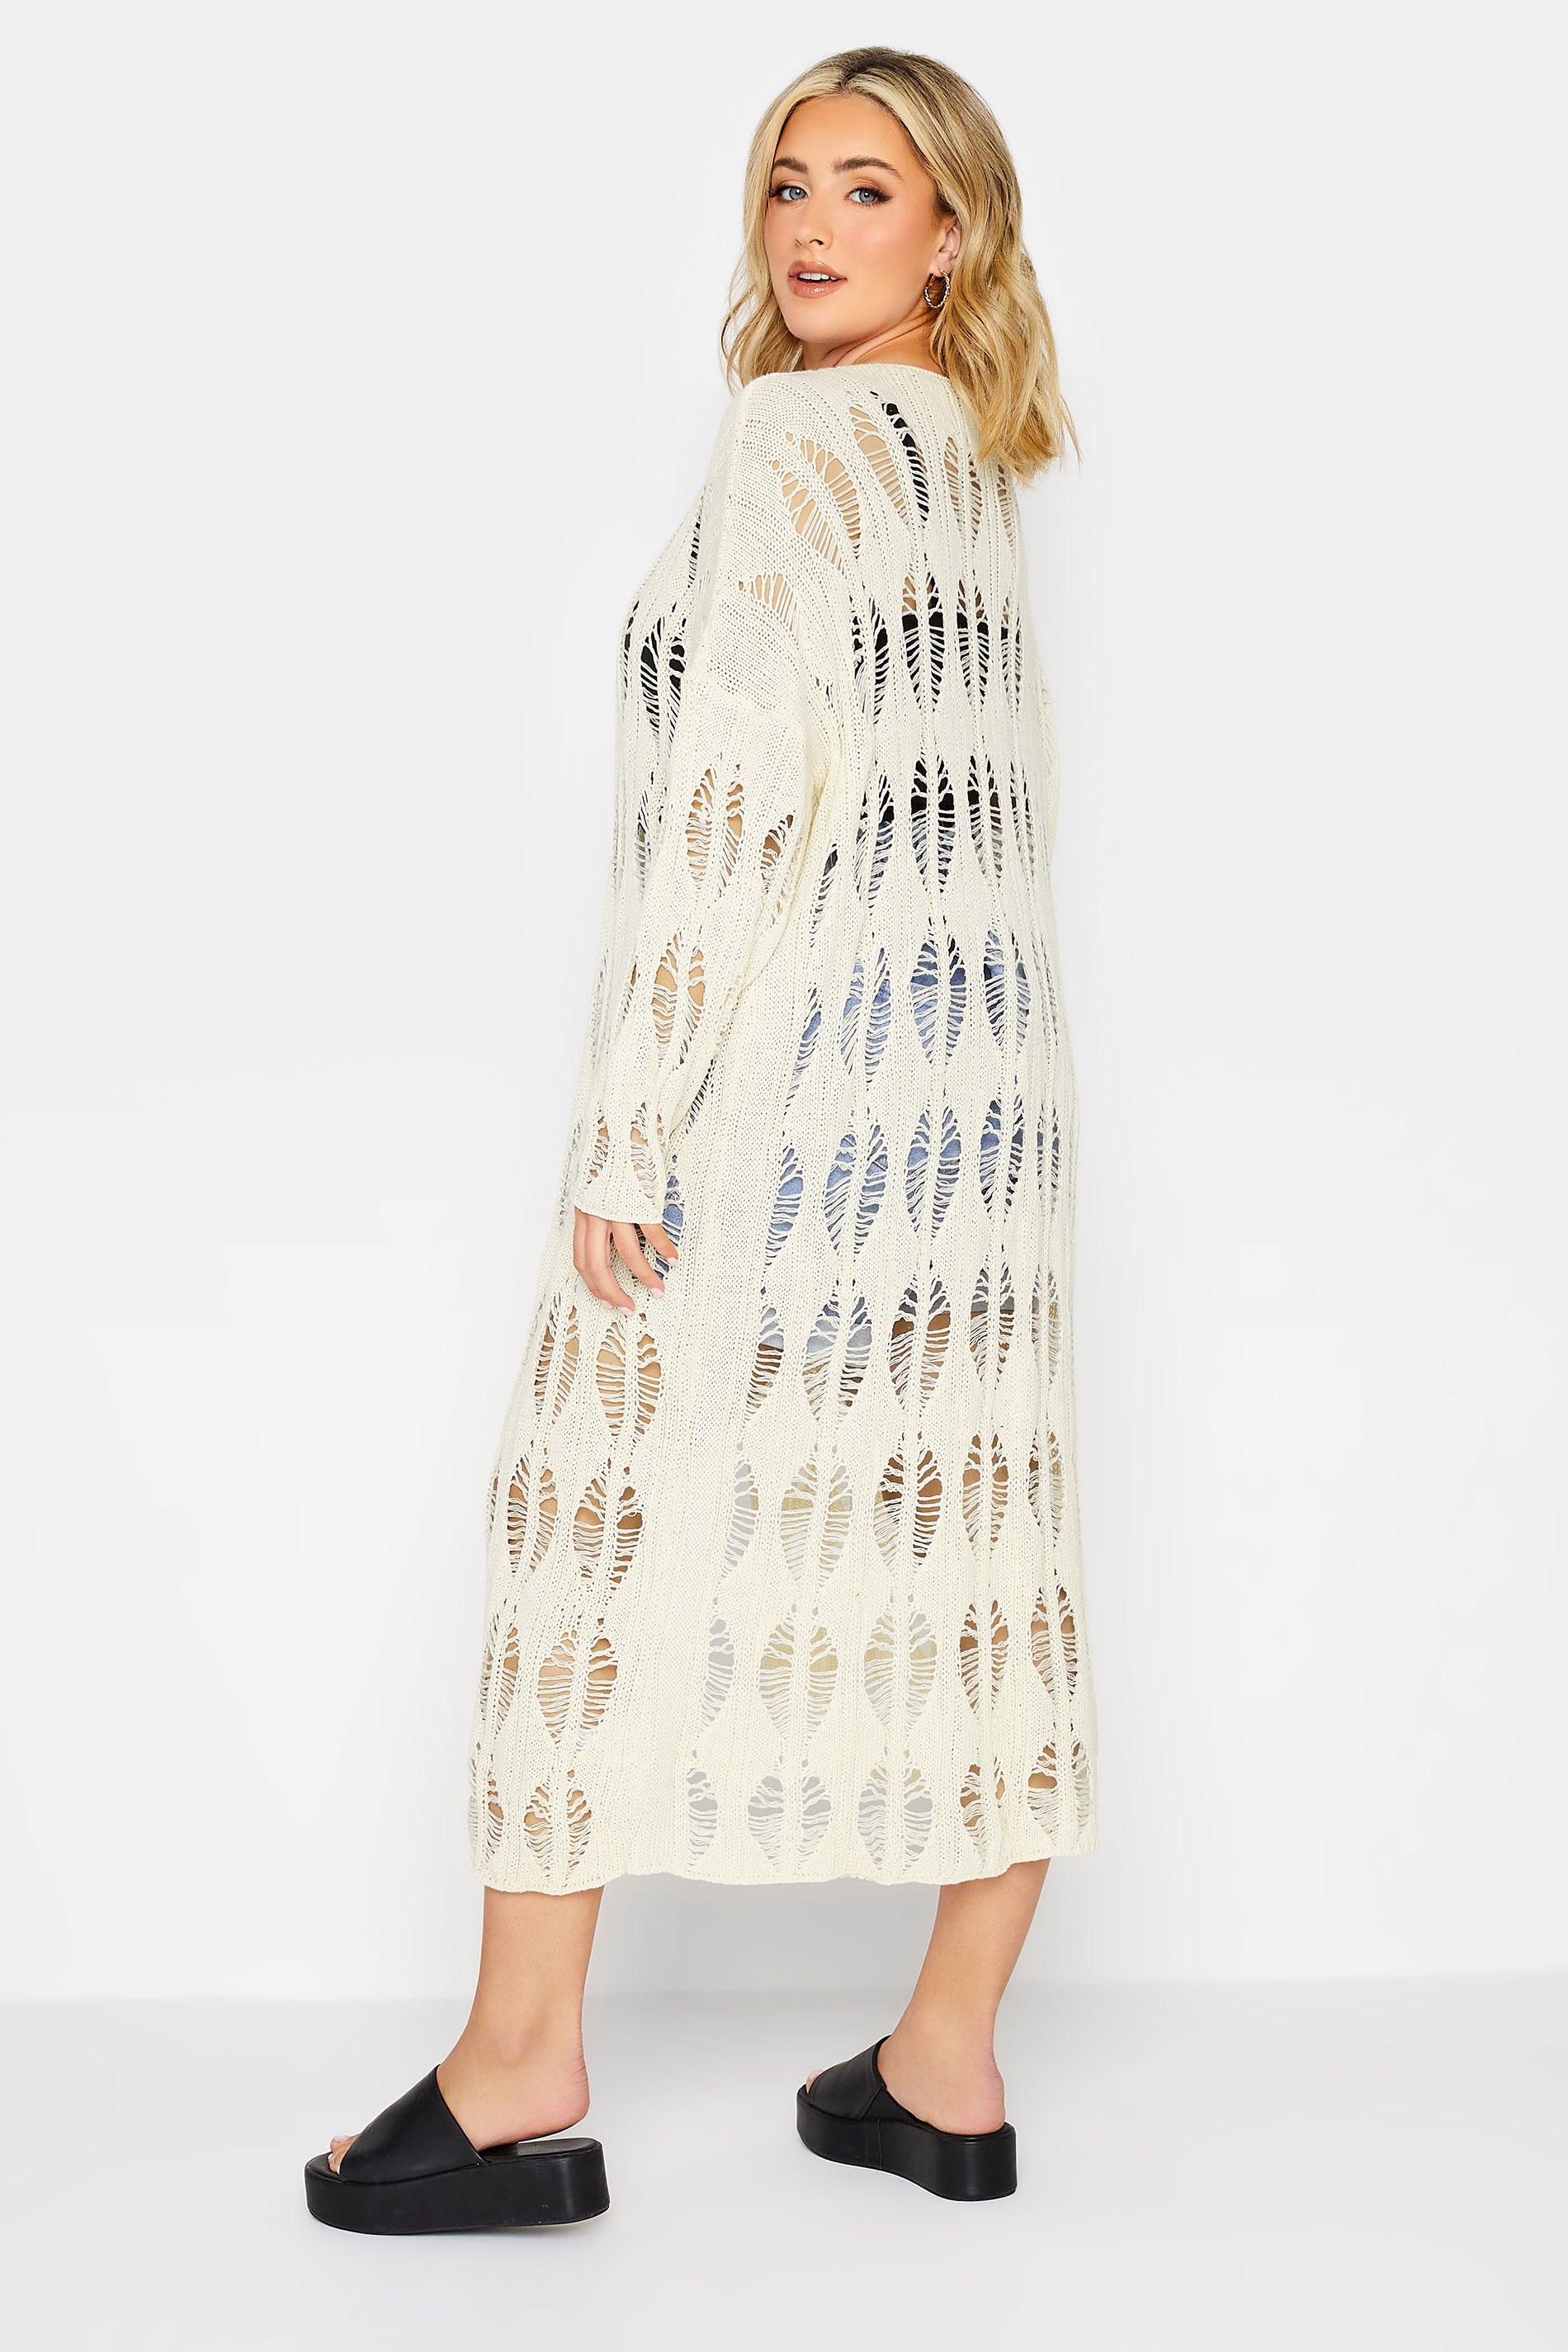 YOURS Plus Size Ivory White Crochet Longline Cardigan | Yours Clothing 3